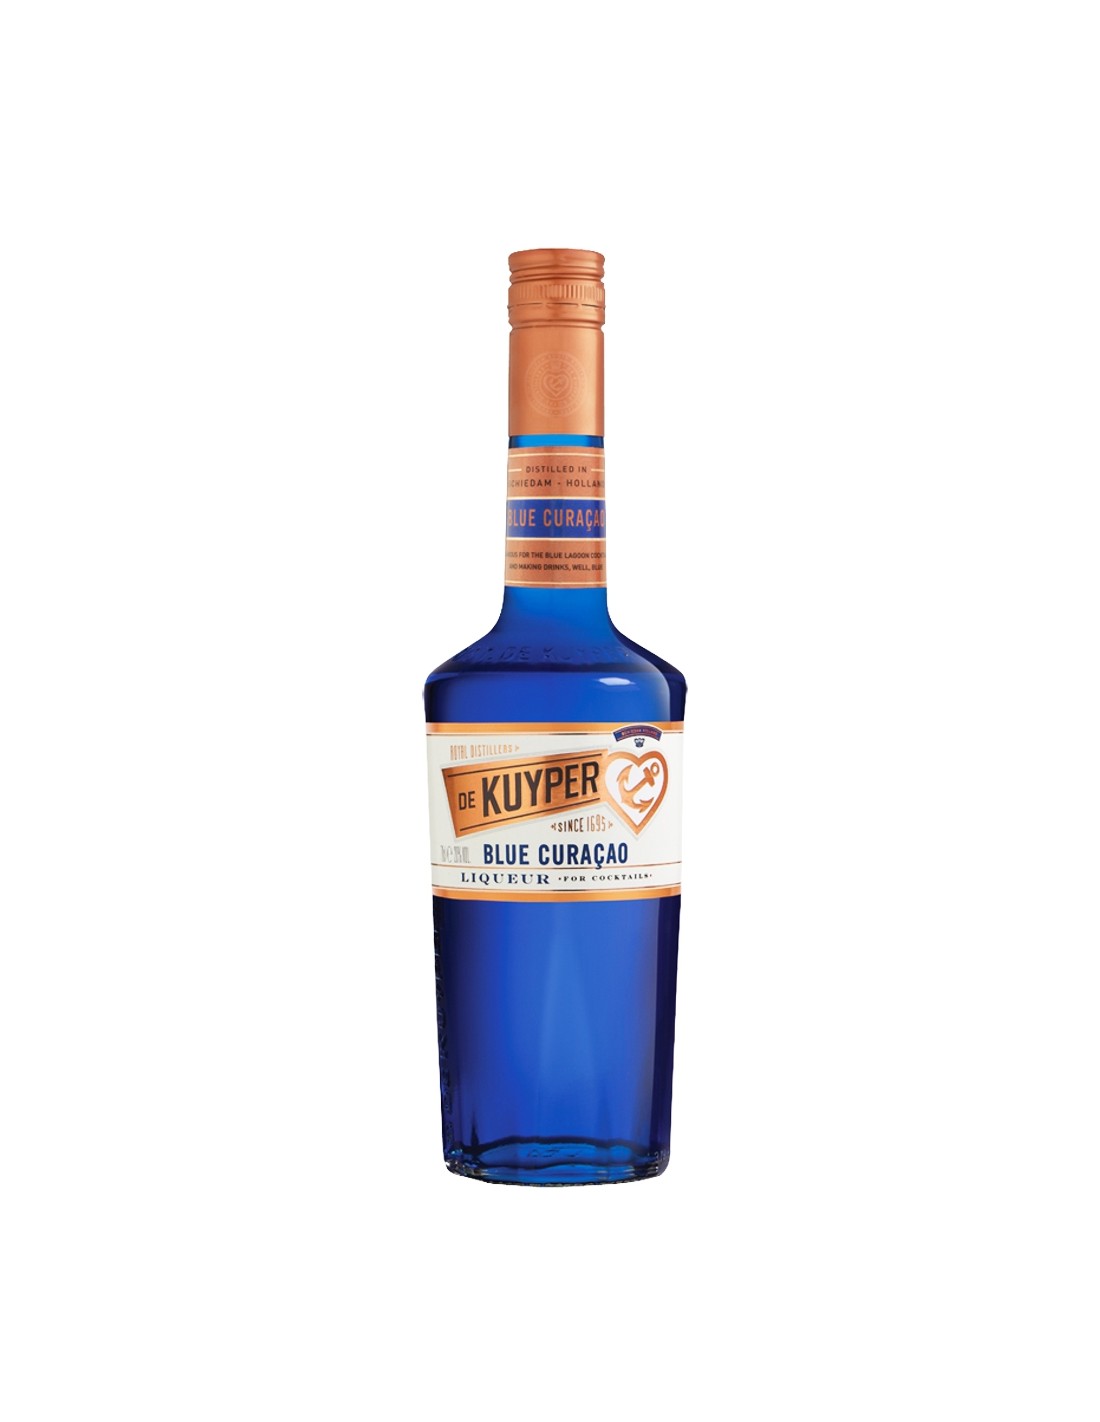 Lichior De Kuyper Blue Curacao, 20% alc., 0.7L, Olanda alcooldiscount.ro